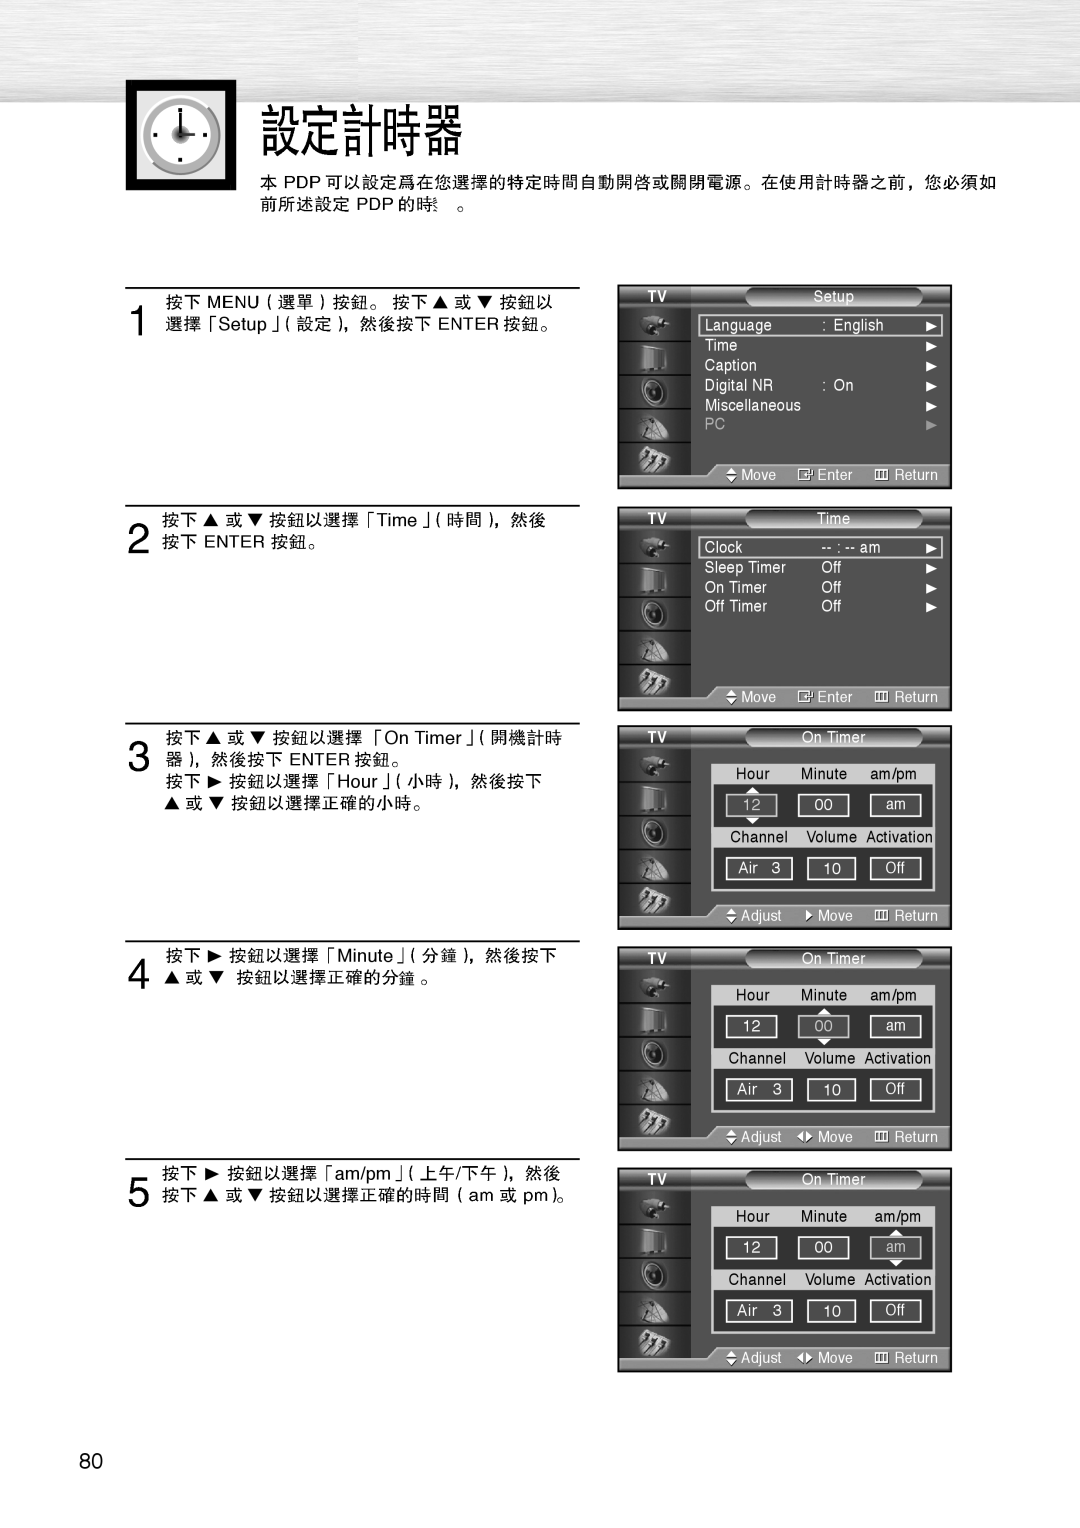 Samsung PL-42D4S manual Setup, On Timer Hour, Minute, am/pm, 00 am 